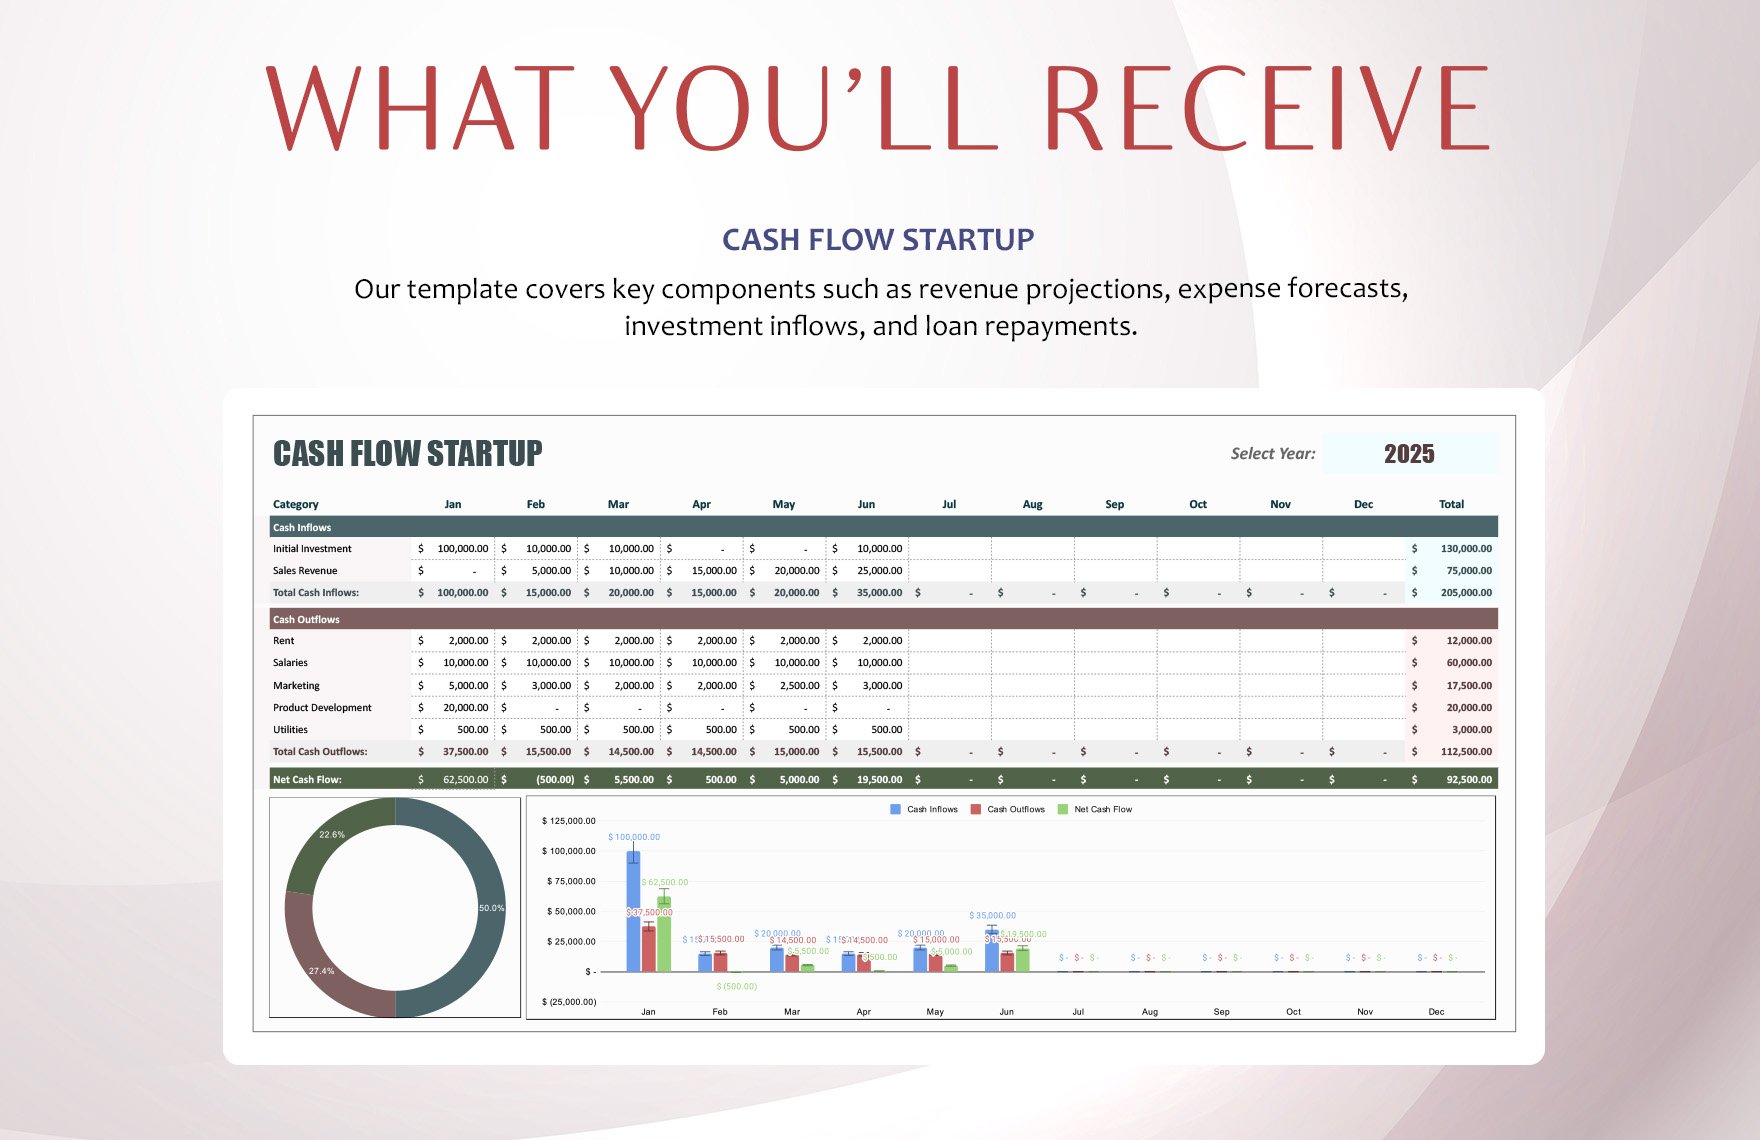 Cash Flow Startup Template